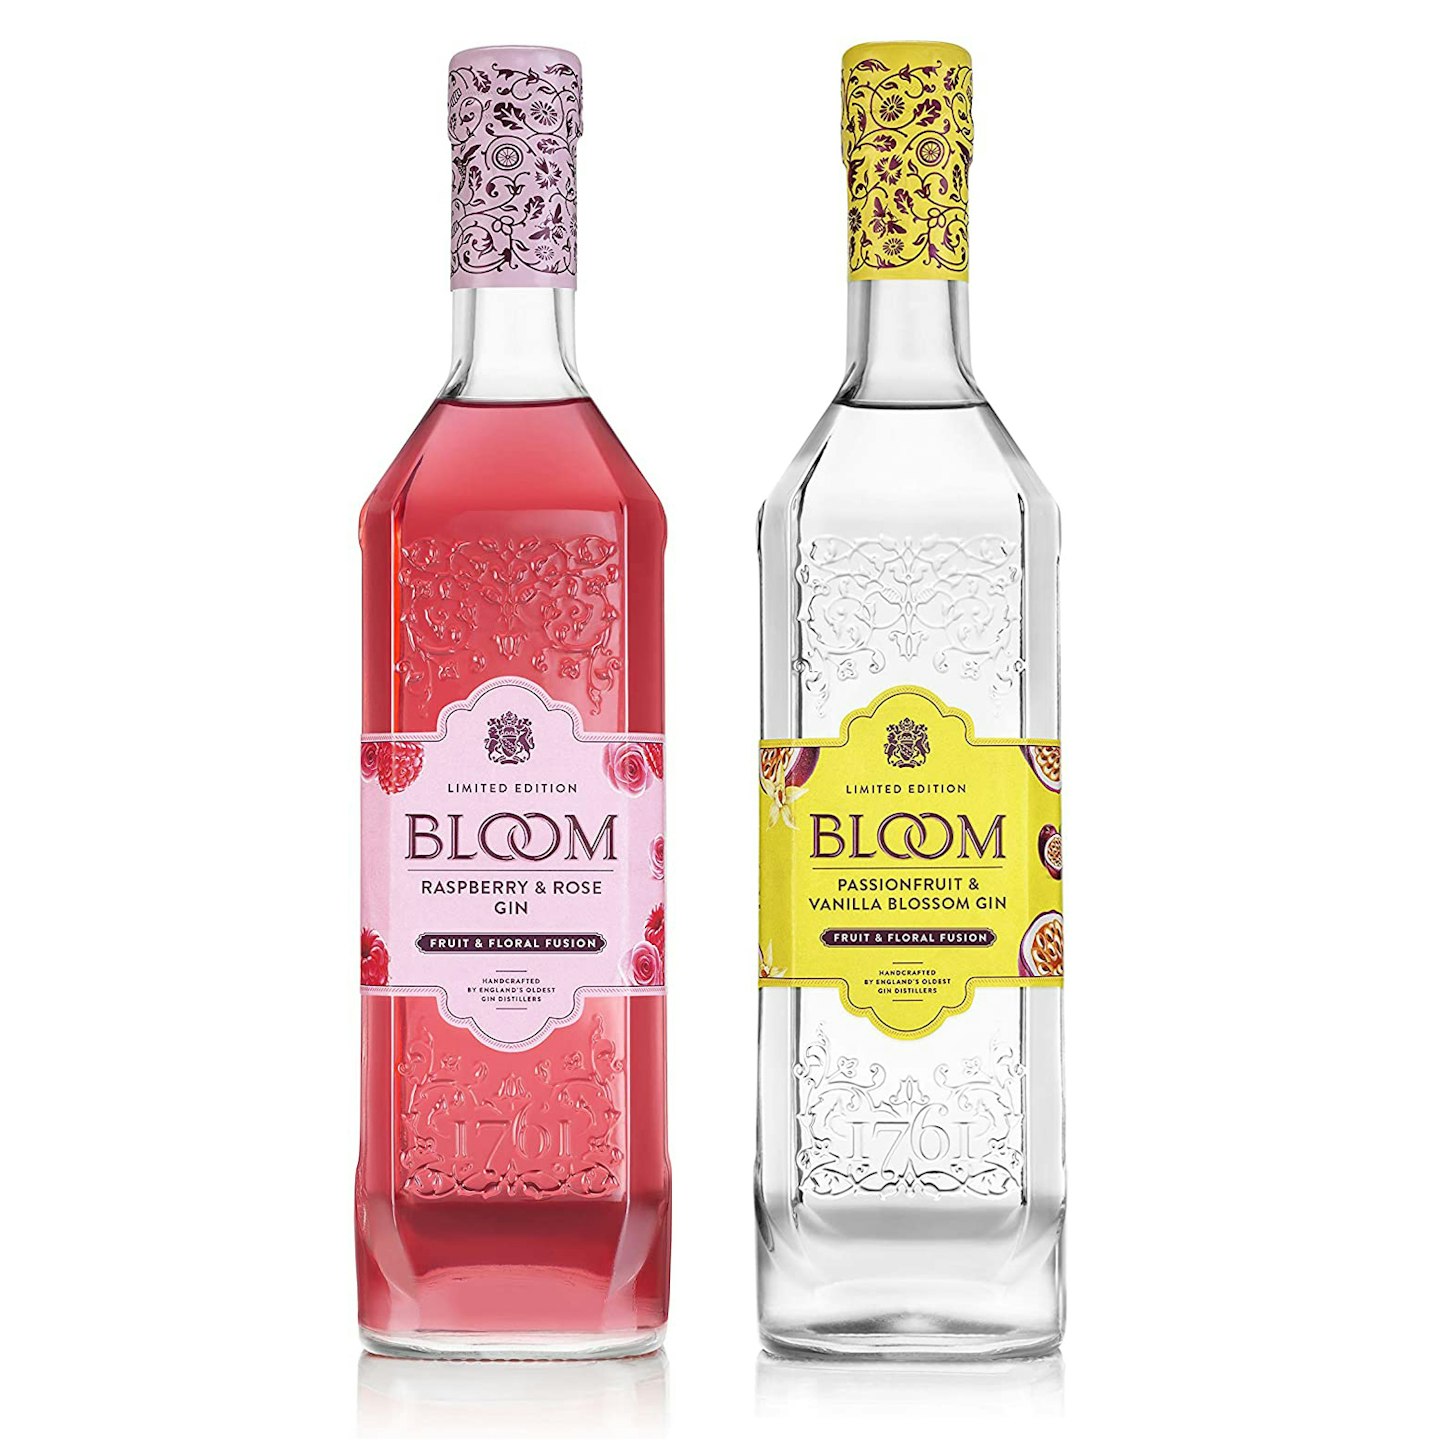 Bloom gins